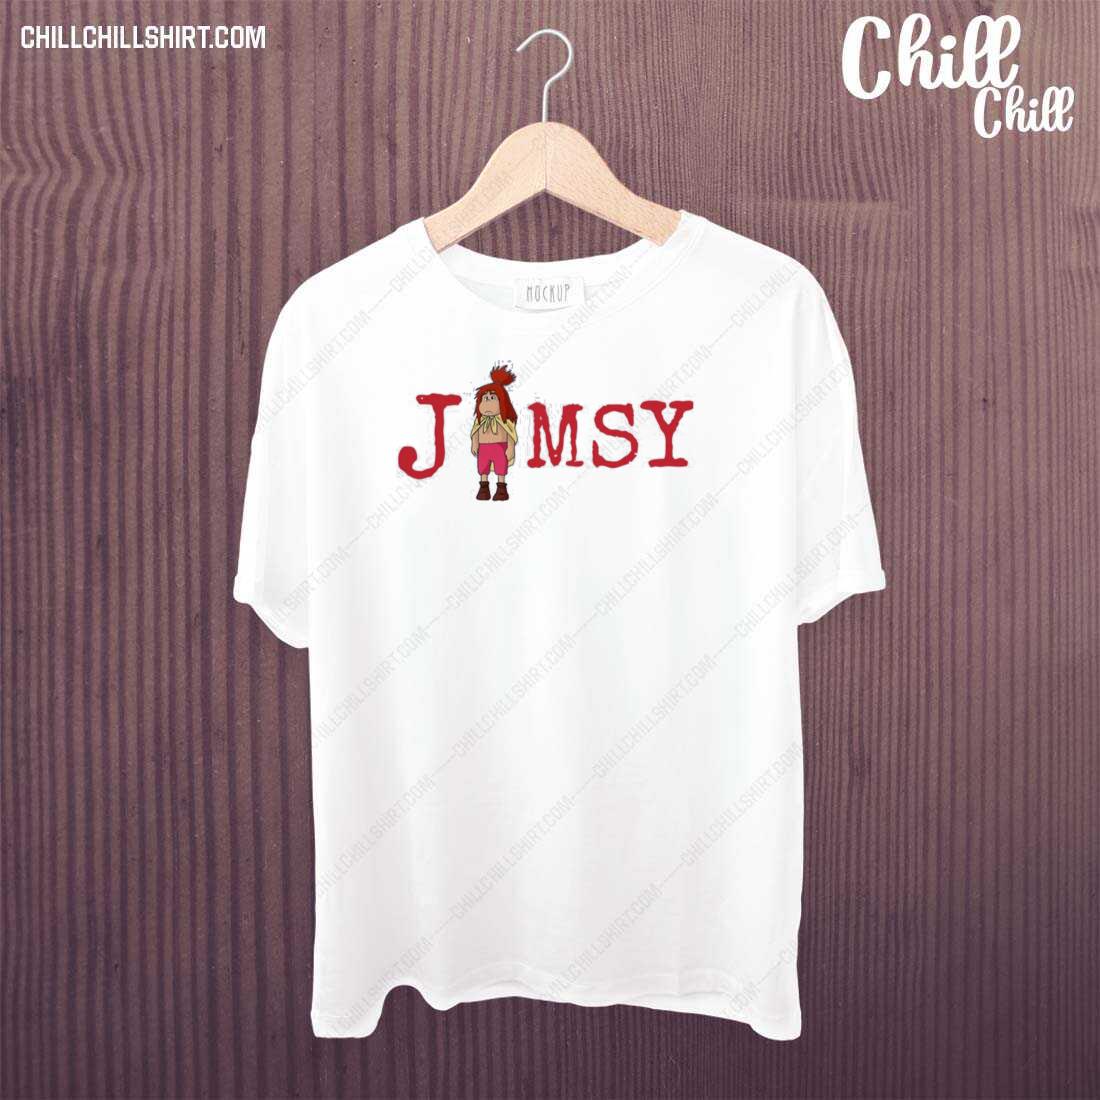 Official cute Jimsy Future Boy Conan T-shirt